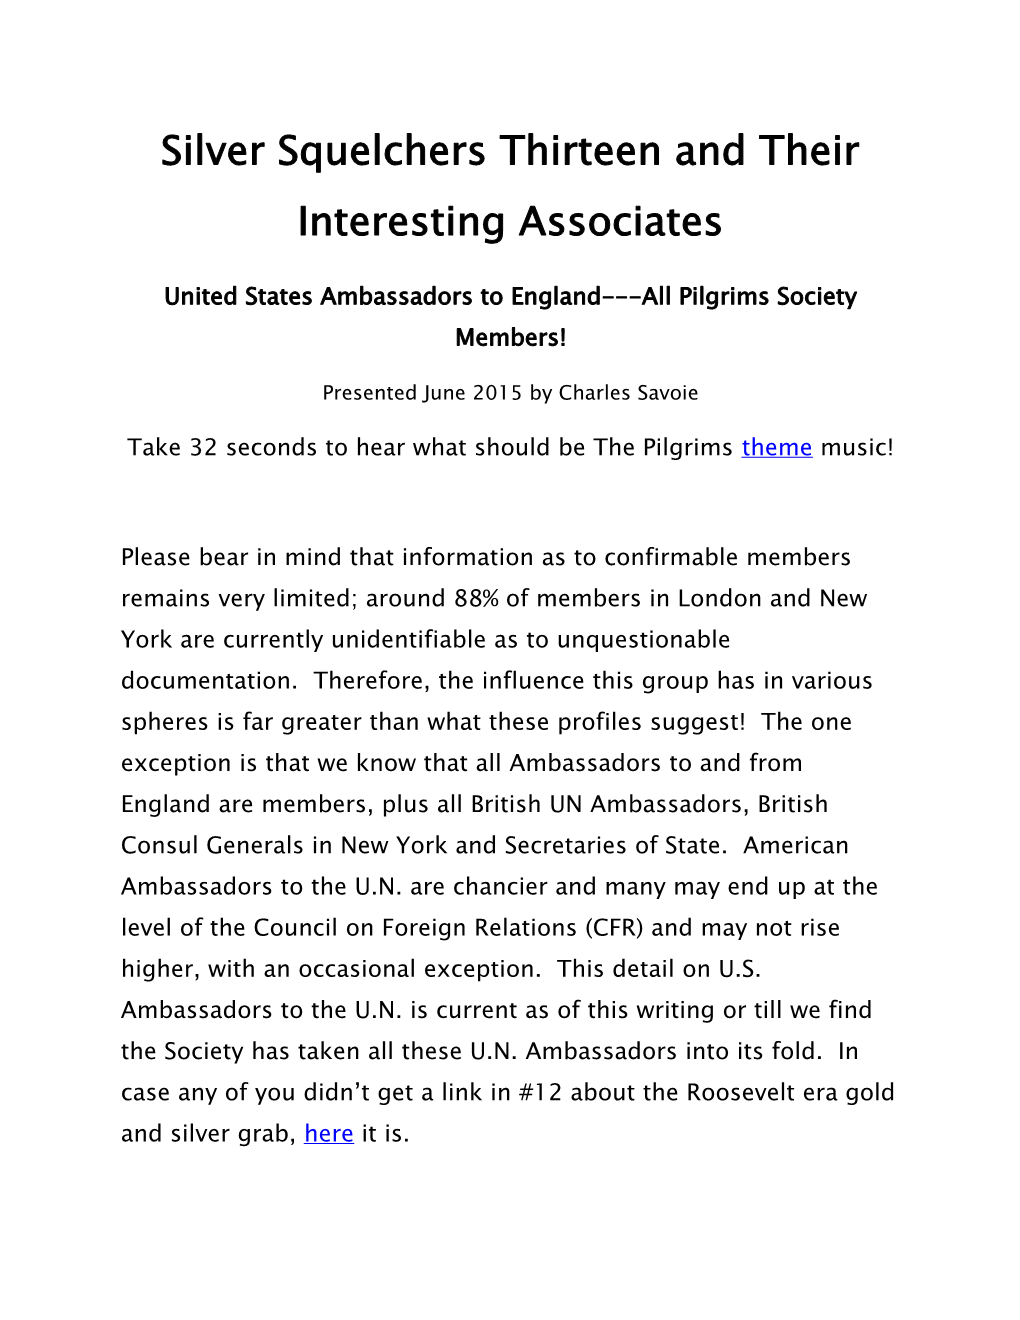 Silver Squelchers Thirteen and Their Interesting Associates